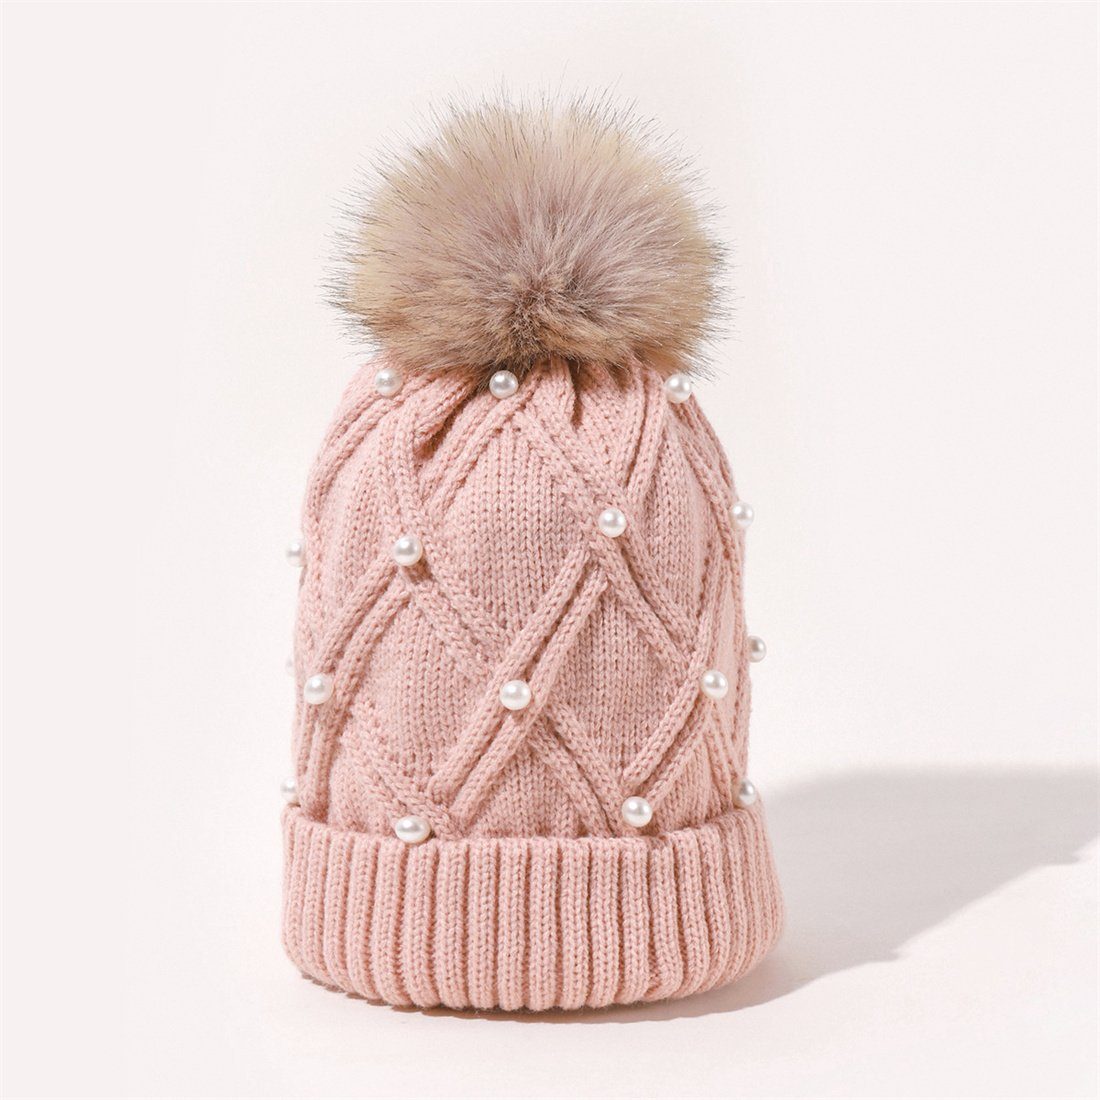 DÖRÖY Strickmütze Thickened Winter Knitted Cap Fashion Hairball Woolen Warm Rosa Women's Cap